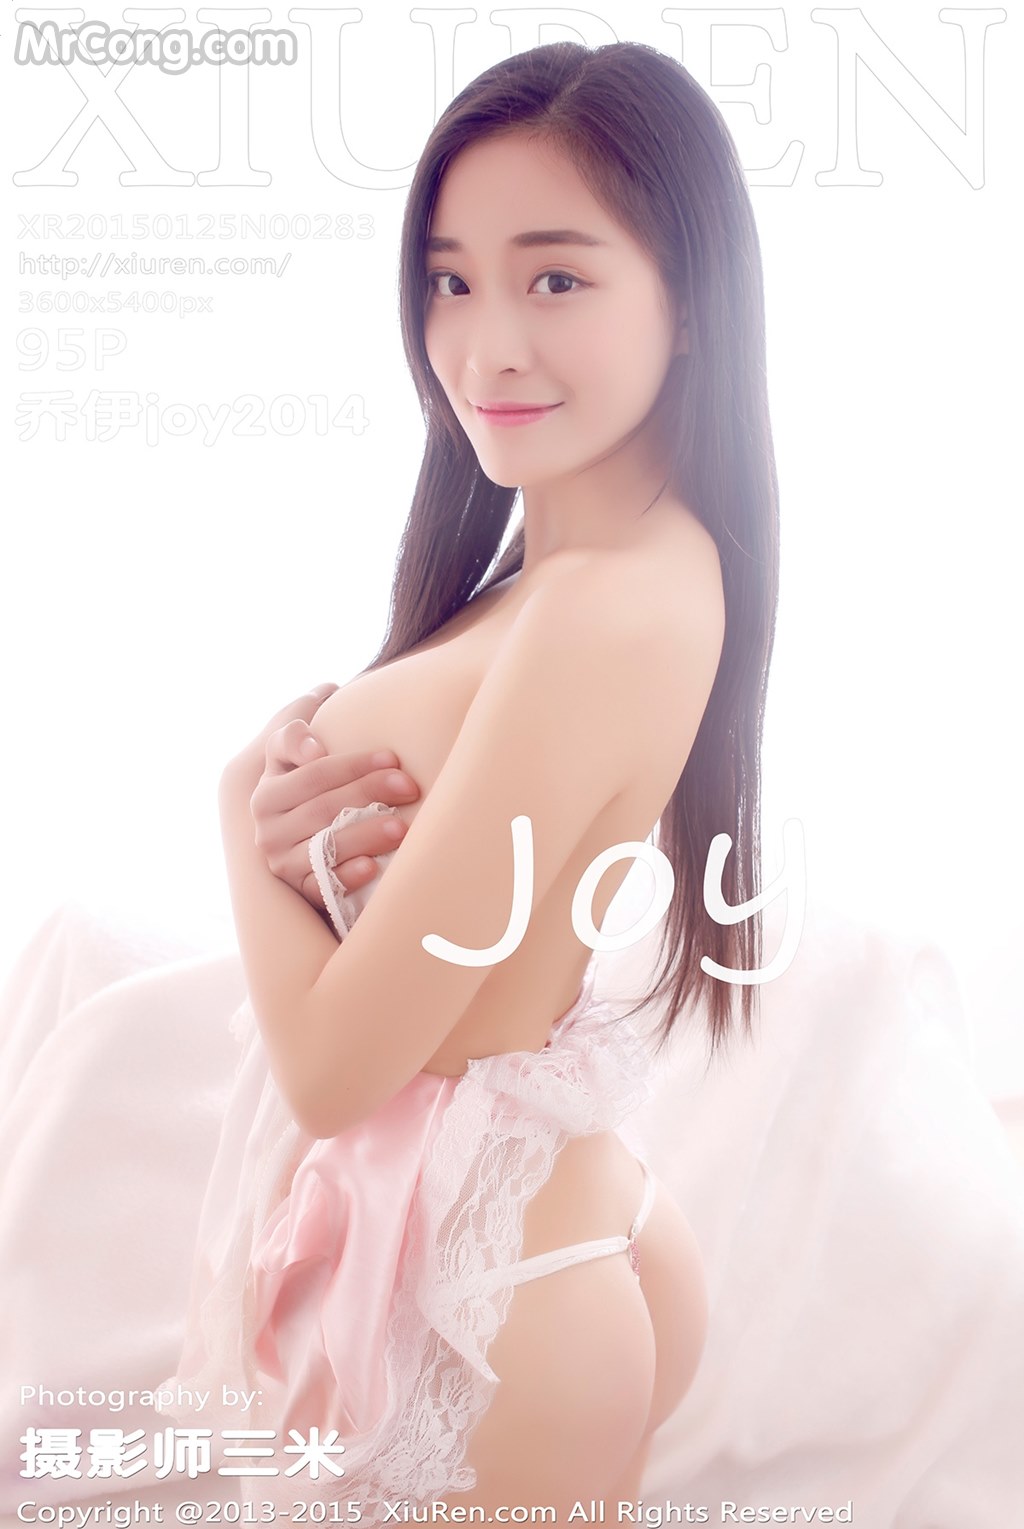 XIUREN No. 2283: Model Joy (乔伊) (96 photos)